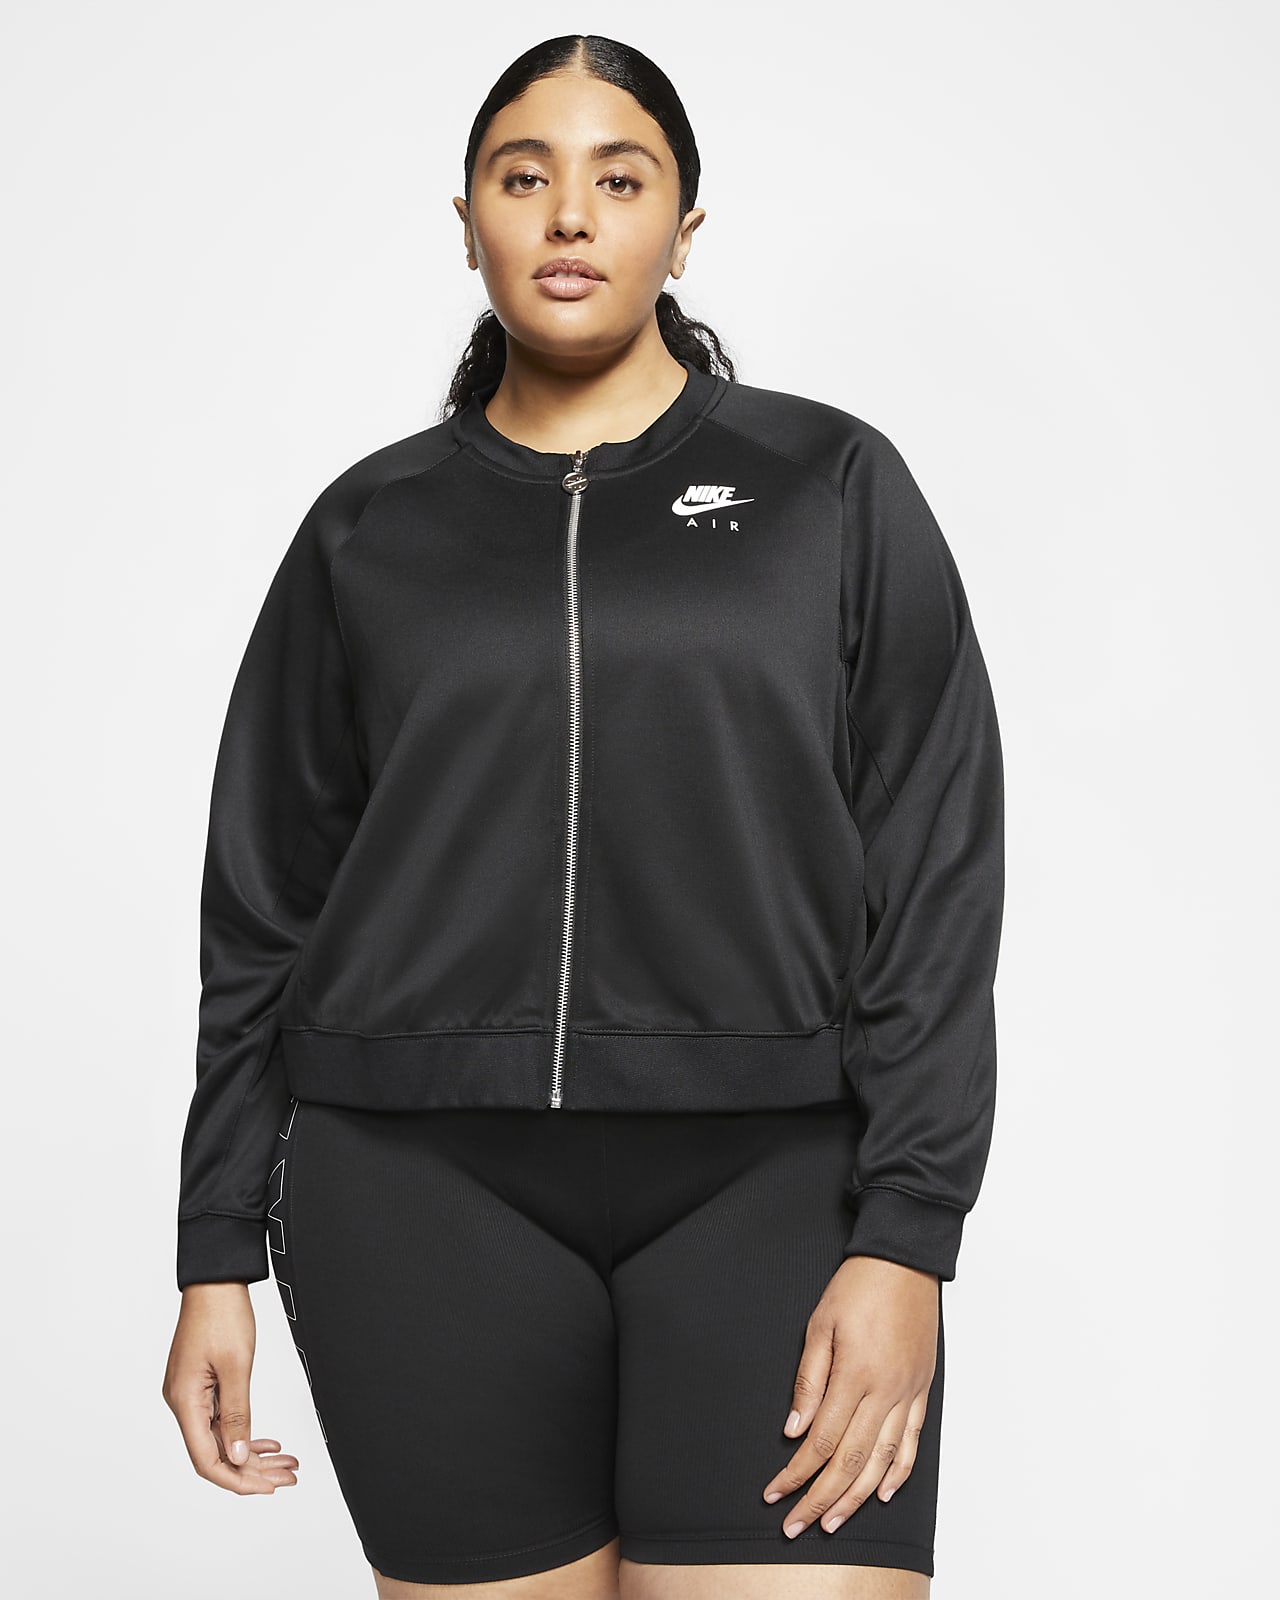 Nike Air Women's Jacket (Plus Size 